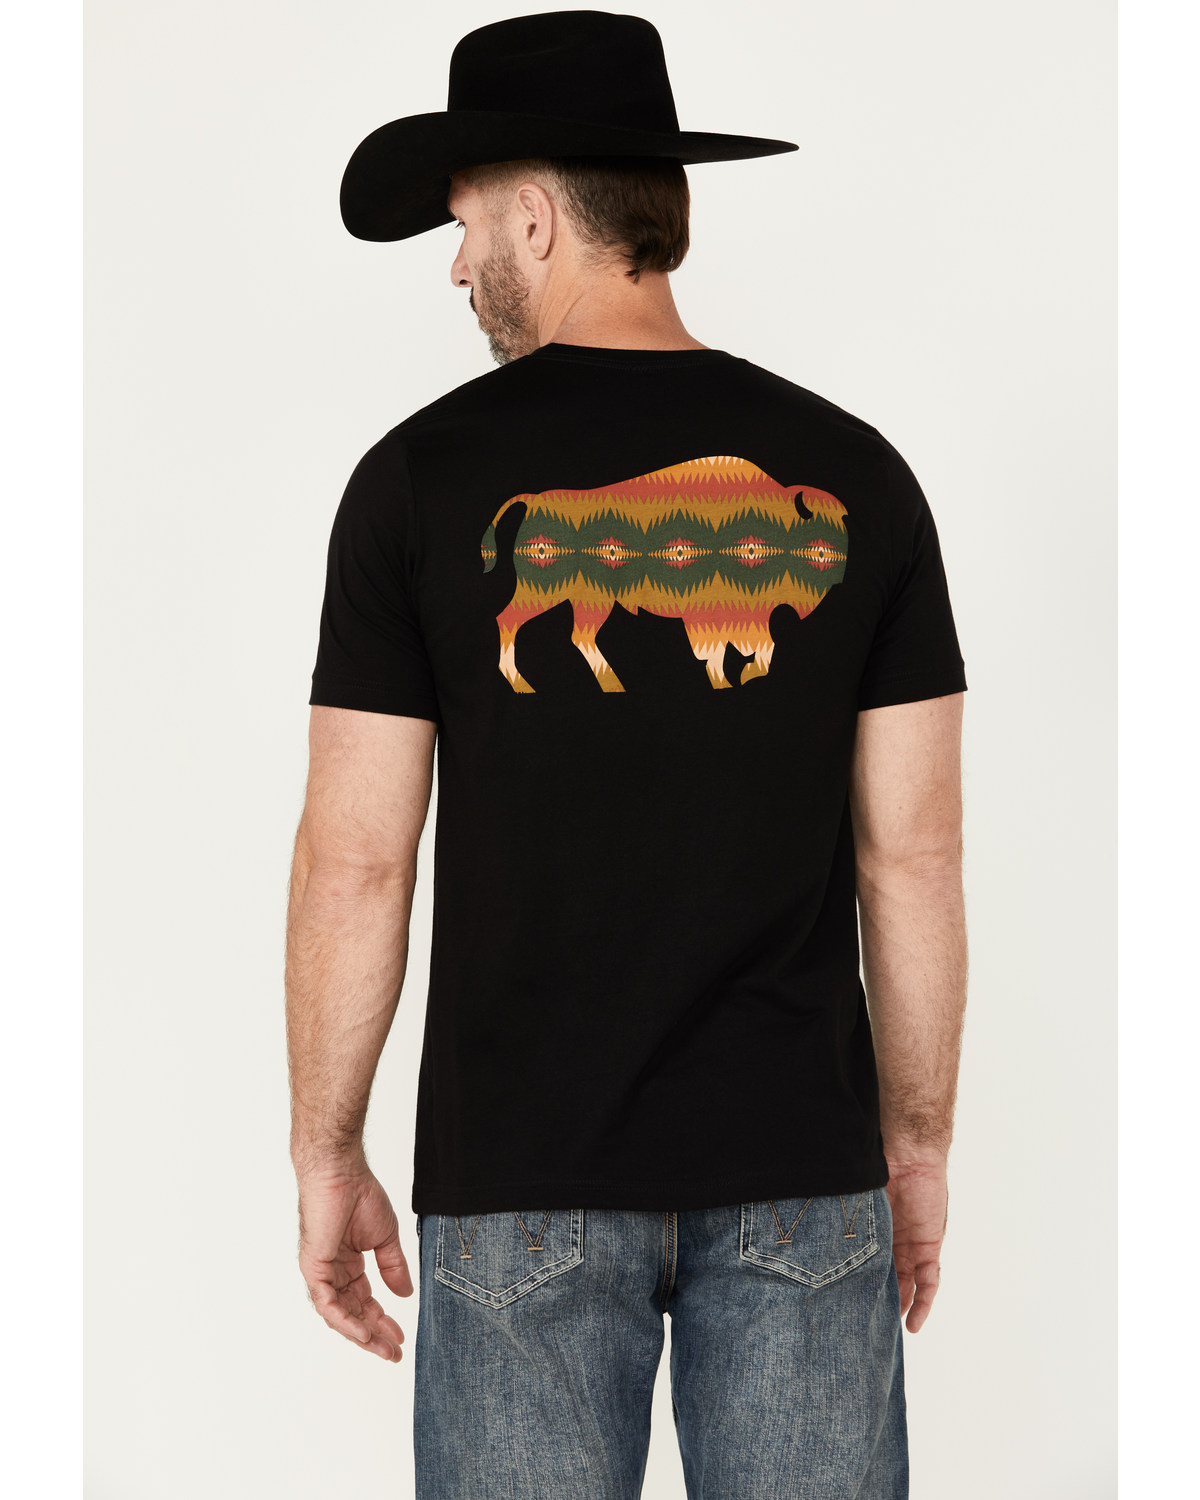 Pendleton Men's Tye River Buffalo Short Sleeve Graphic T-Shirt